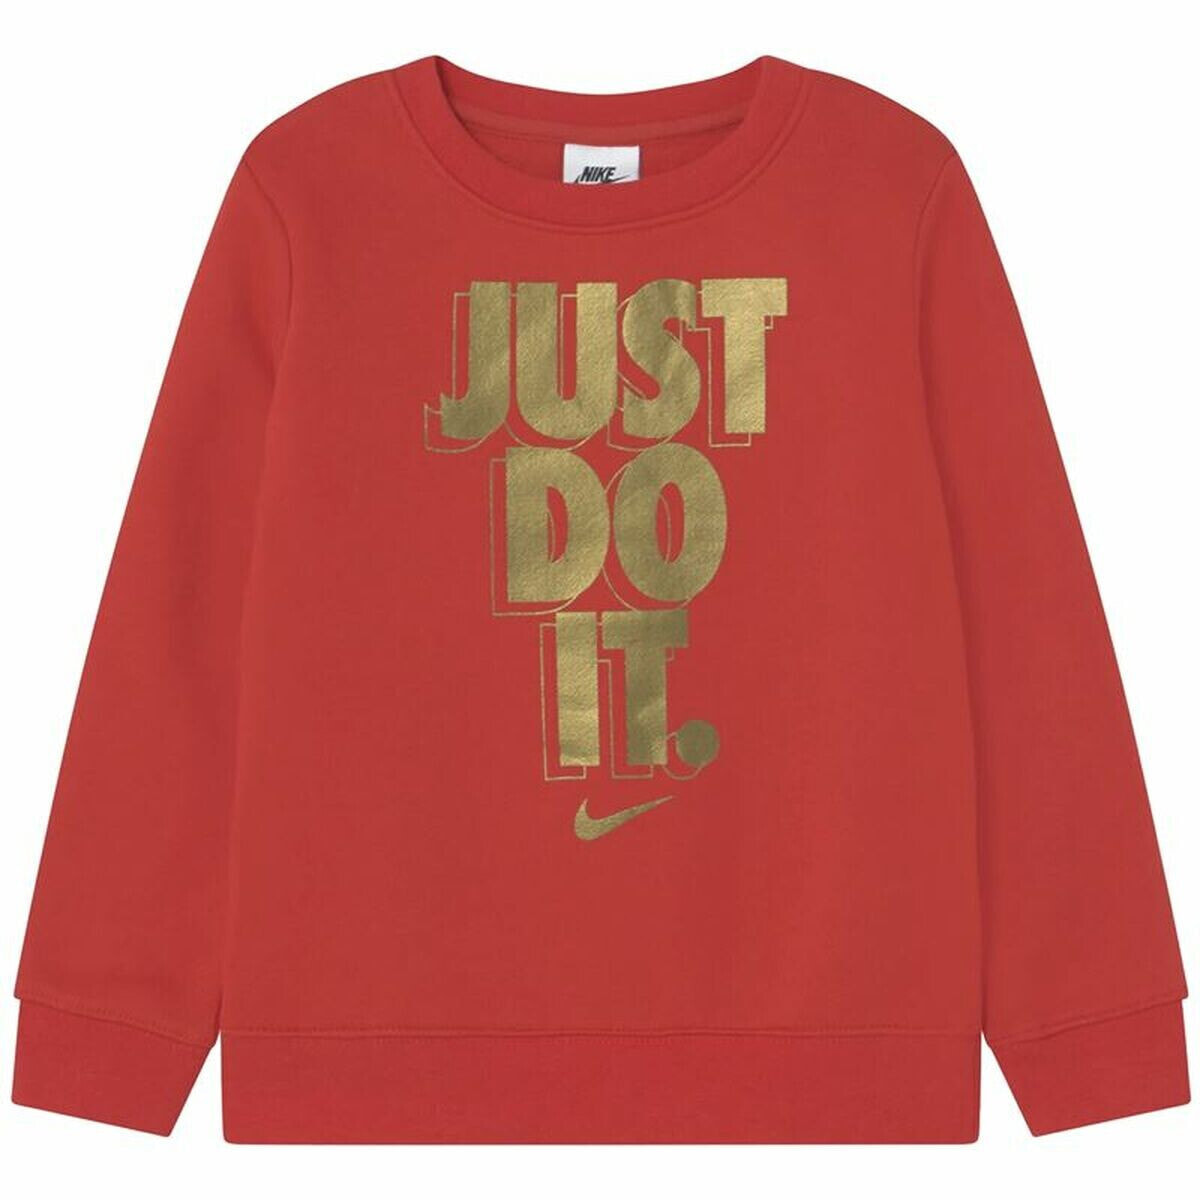 Children’s Sweatshirt without Hood Nike Gifting Red